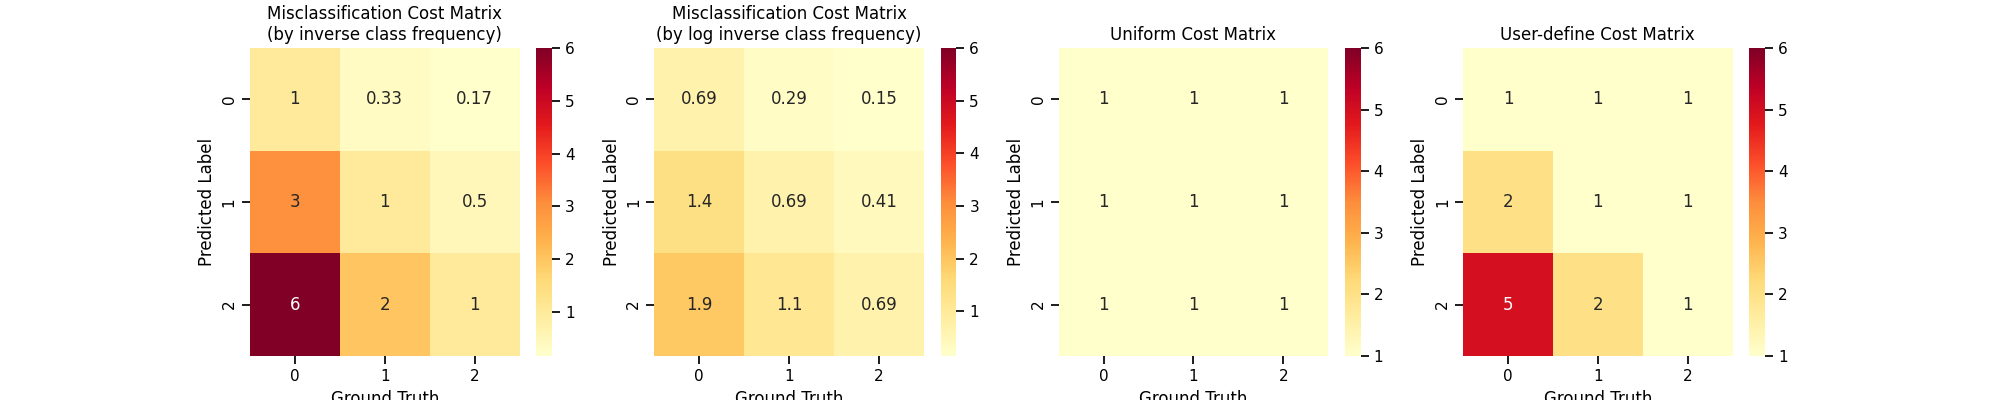 Misclassification Cost Matrix (by inverse class frequency), Misclassification Cost Matrix (by log inverse class frequency), Uniform Cost Matrix, User-define Cost Matrix